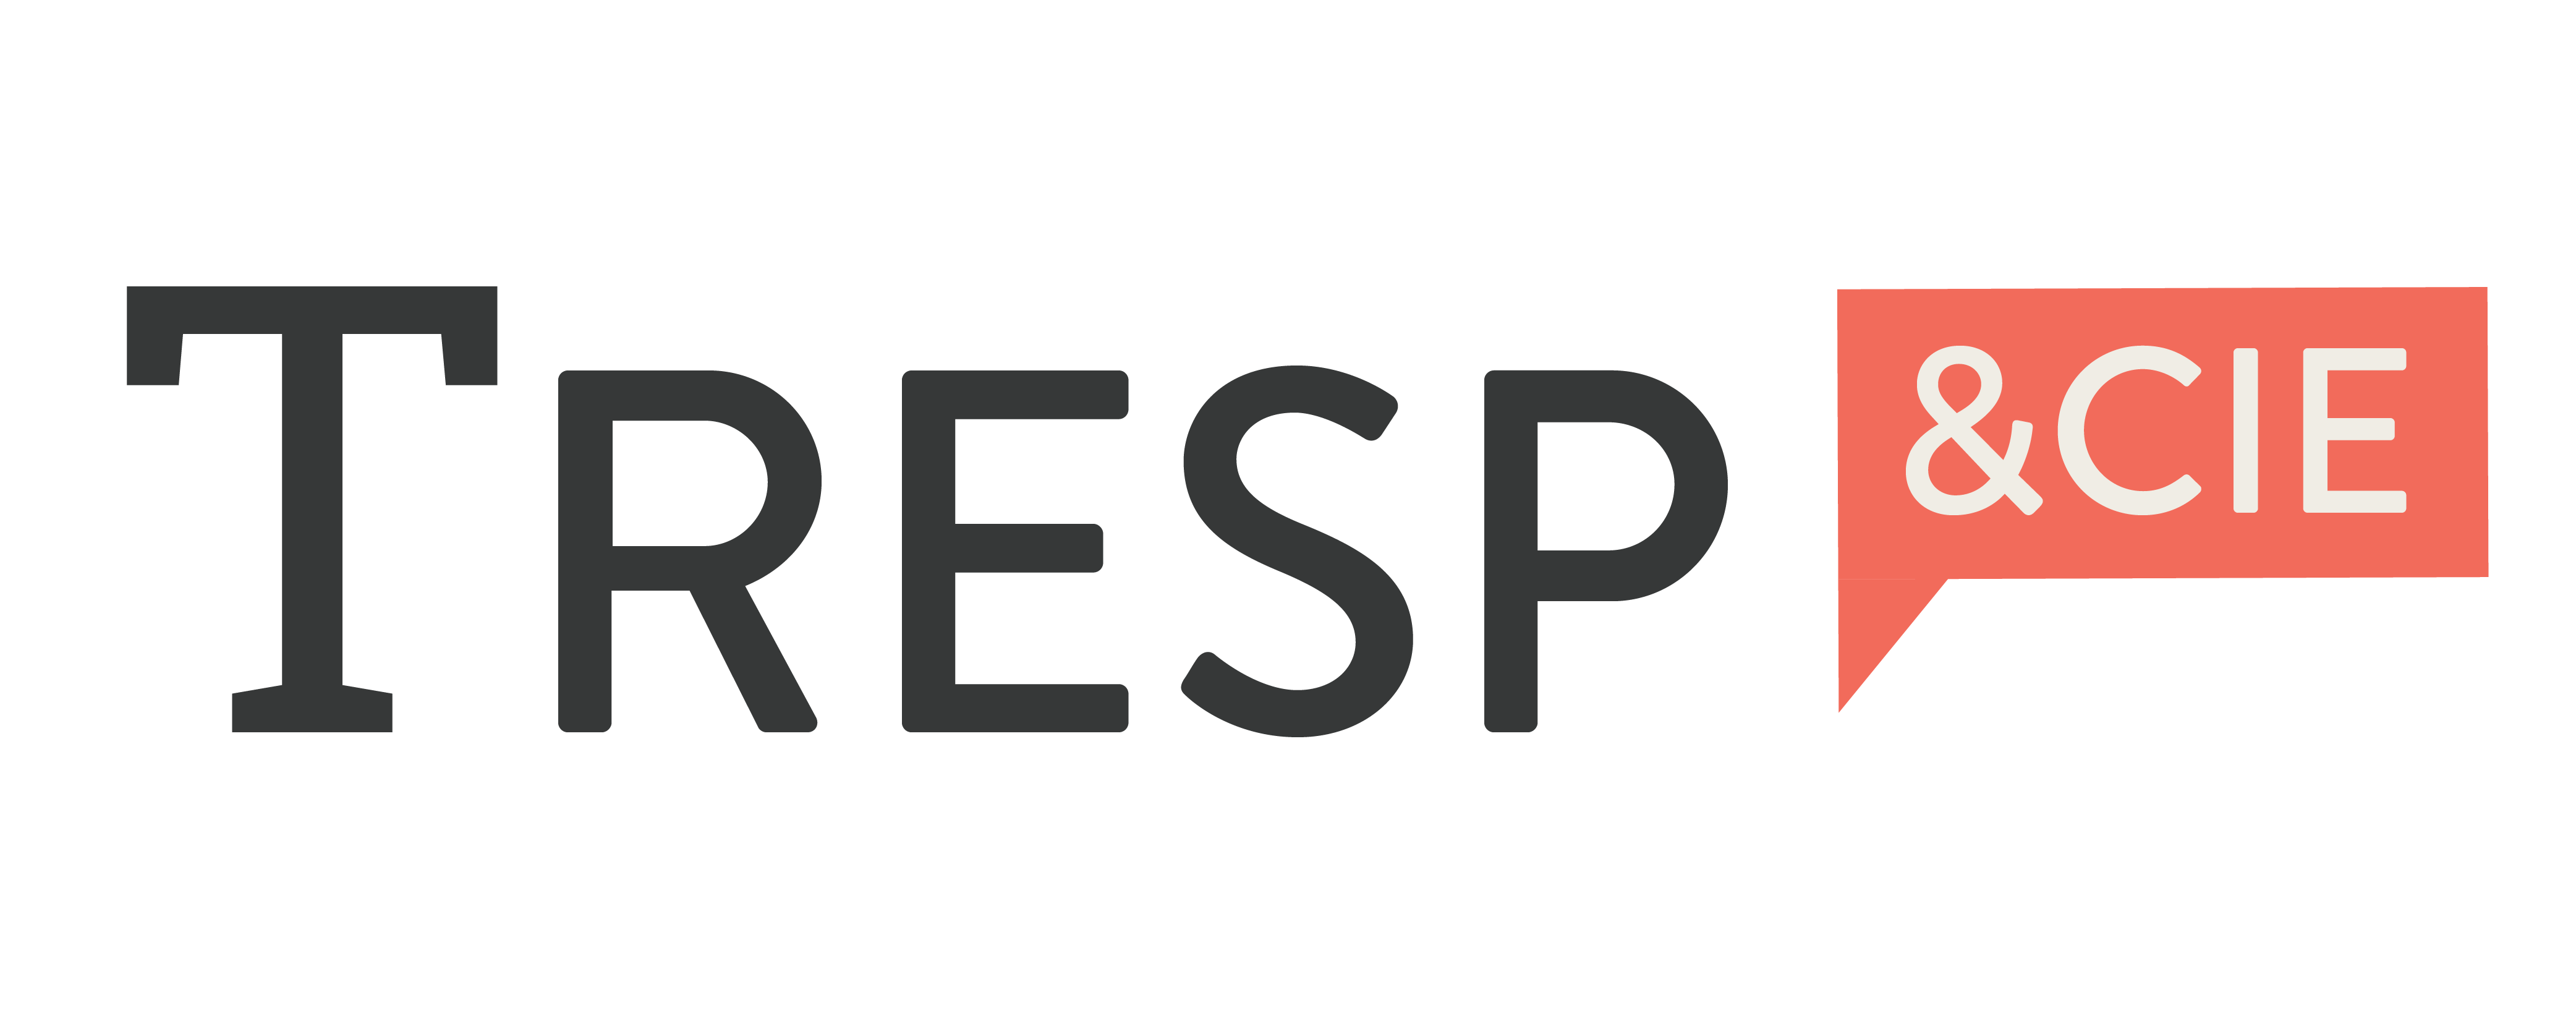 TRESP & CIE GmbH Logo